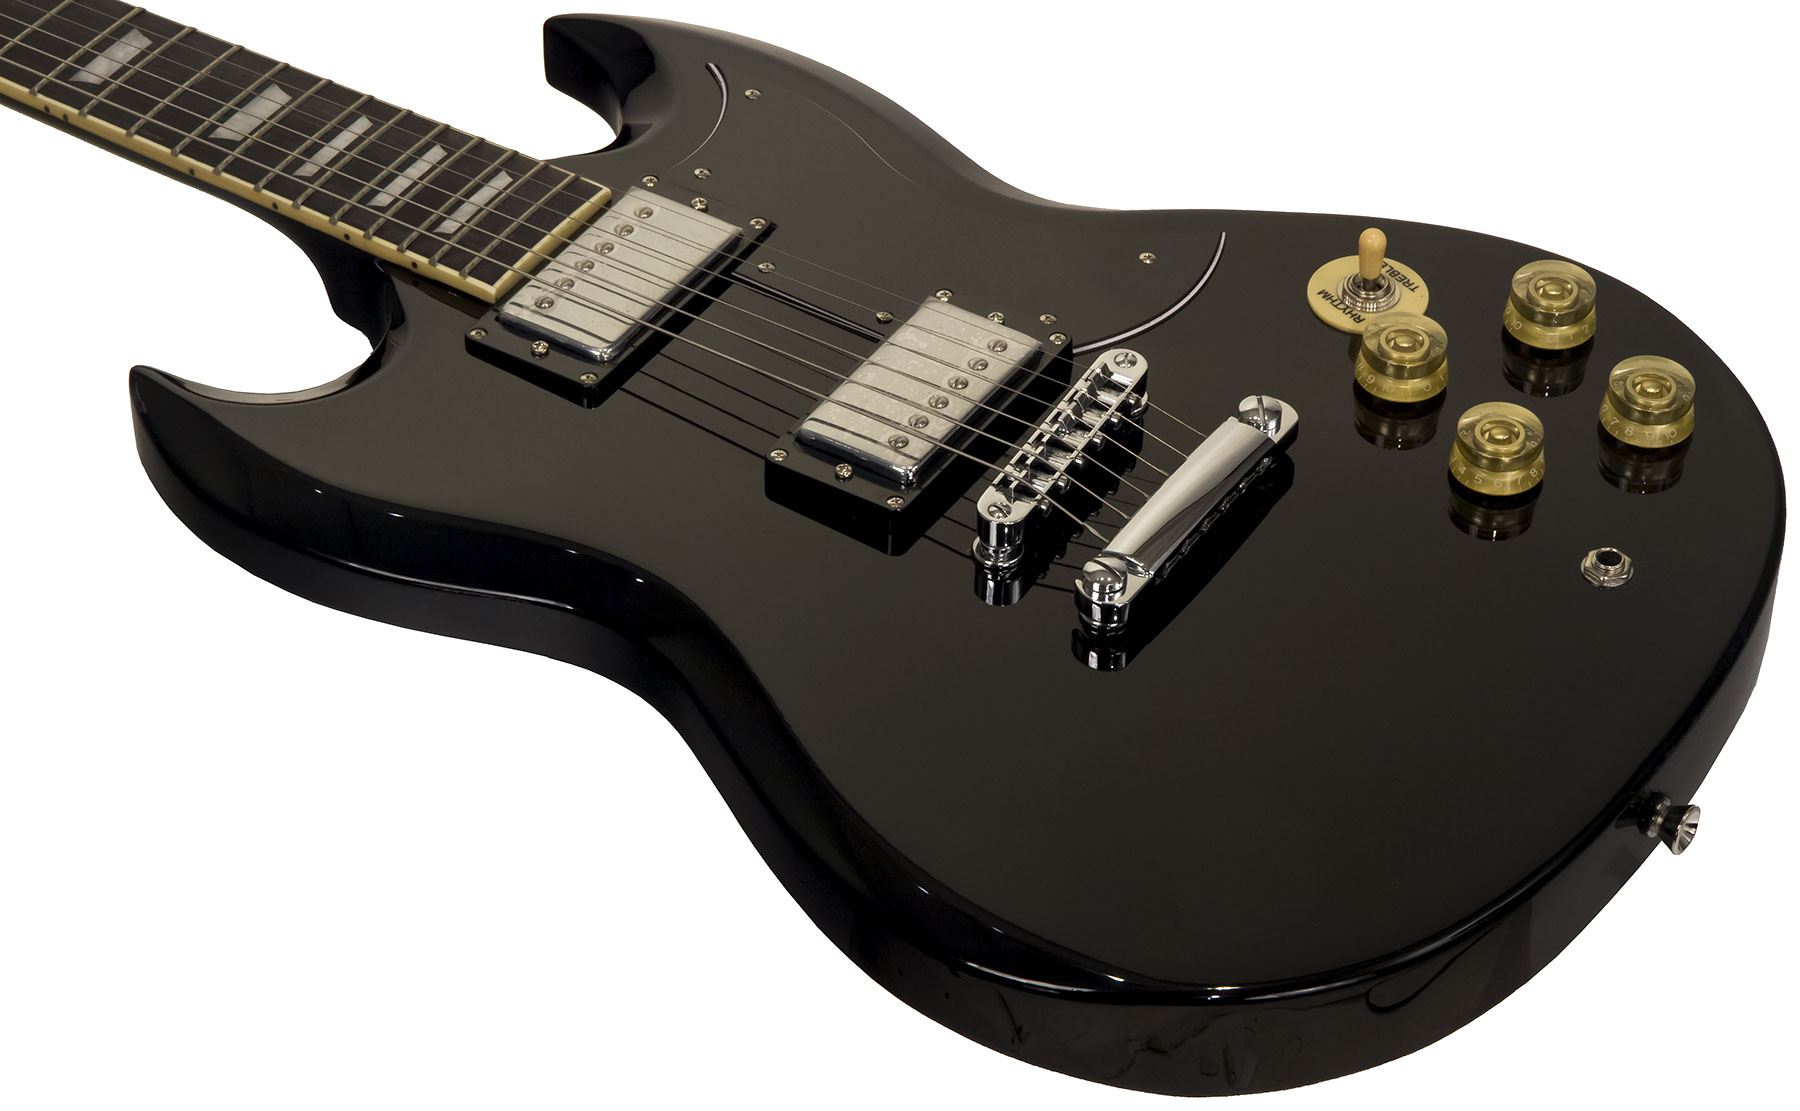 Eastone Sdc70 +marshall Mg10g Gold +cable +housse +courroie +mediators - Black - Elektrische gitaar set - Variation 3